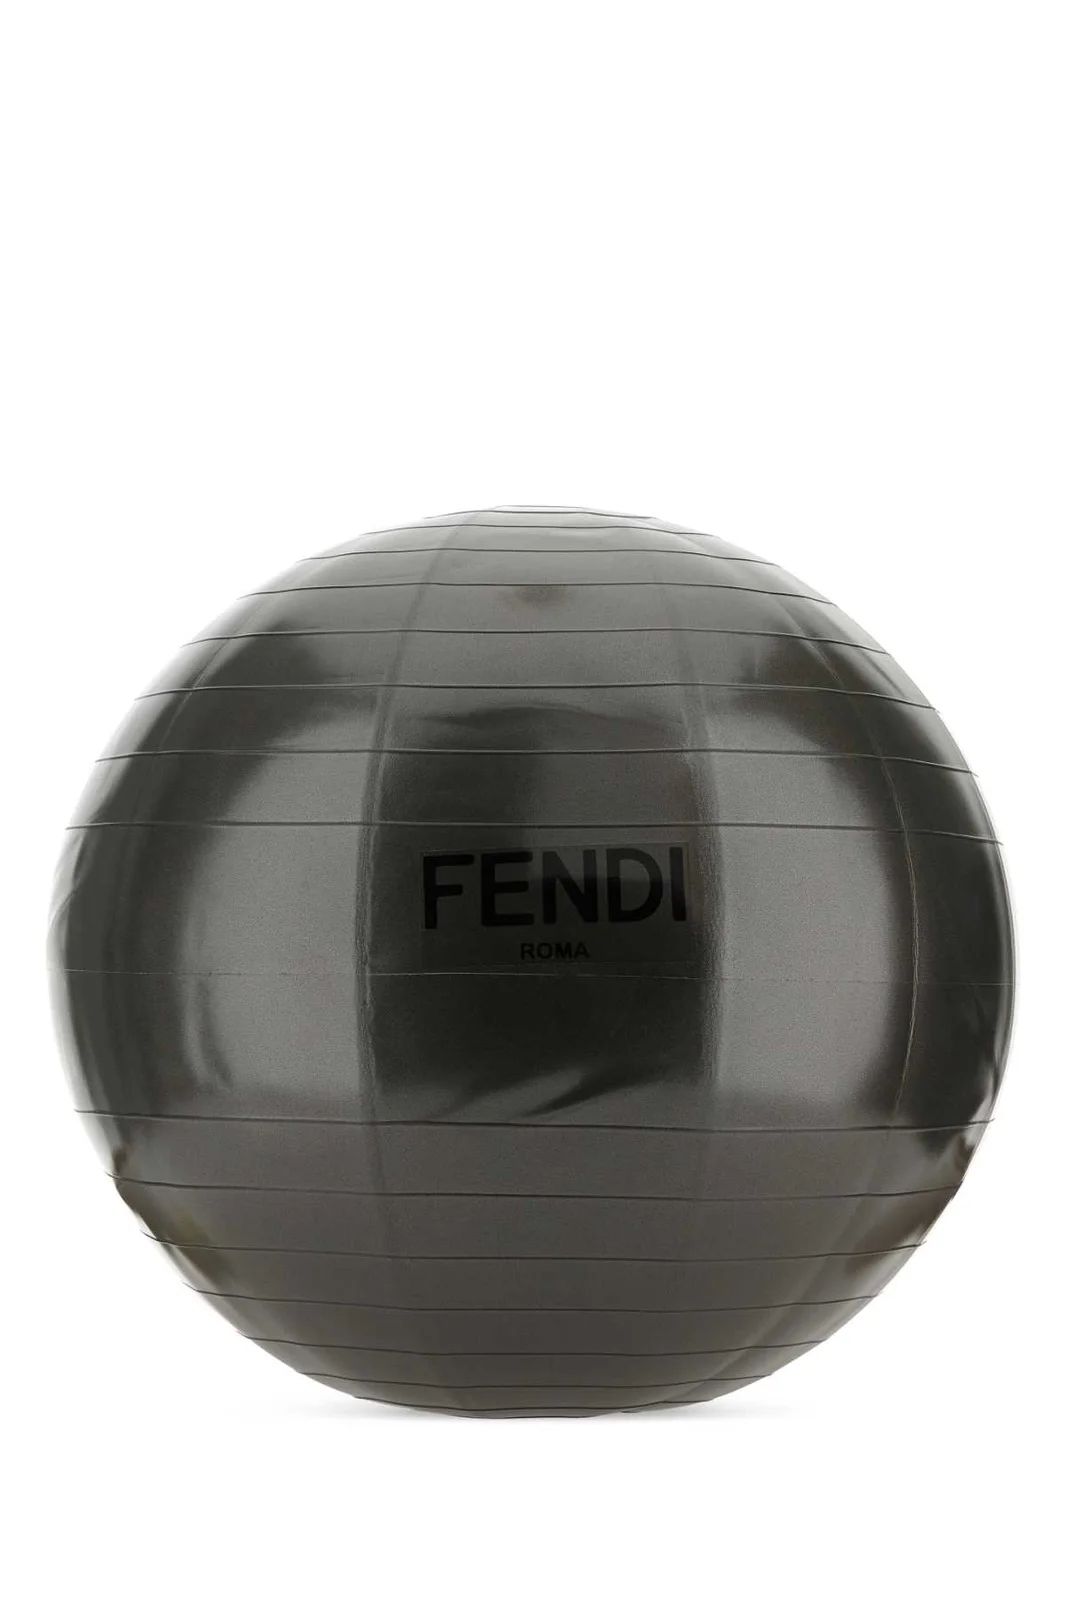 Fendi Pilates Ball | Cettire Global